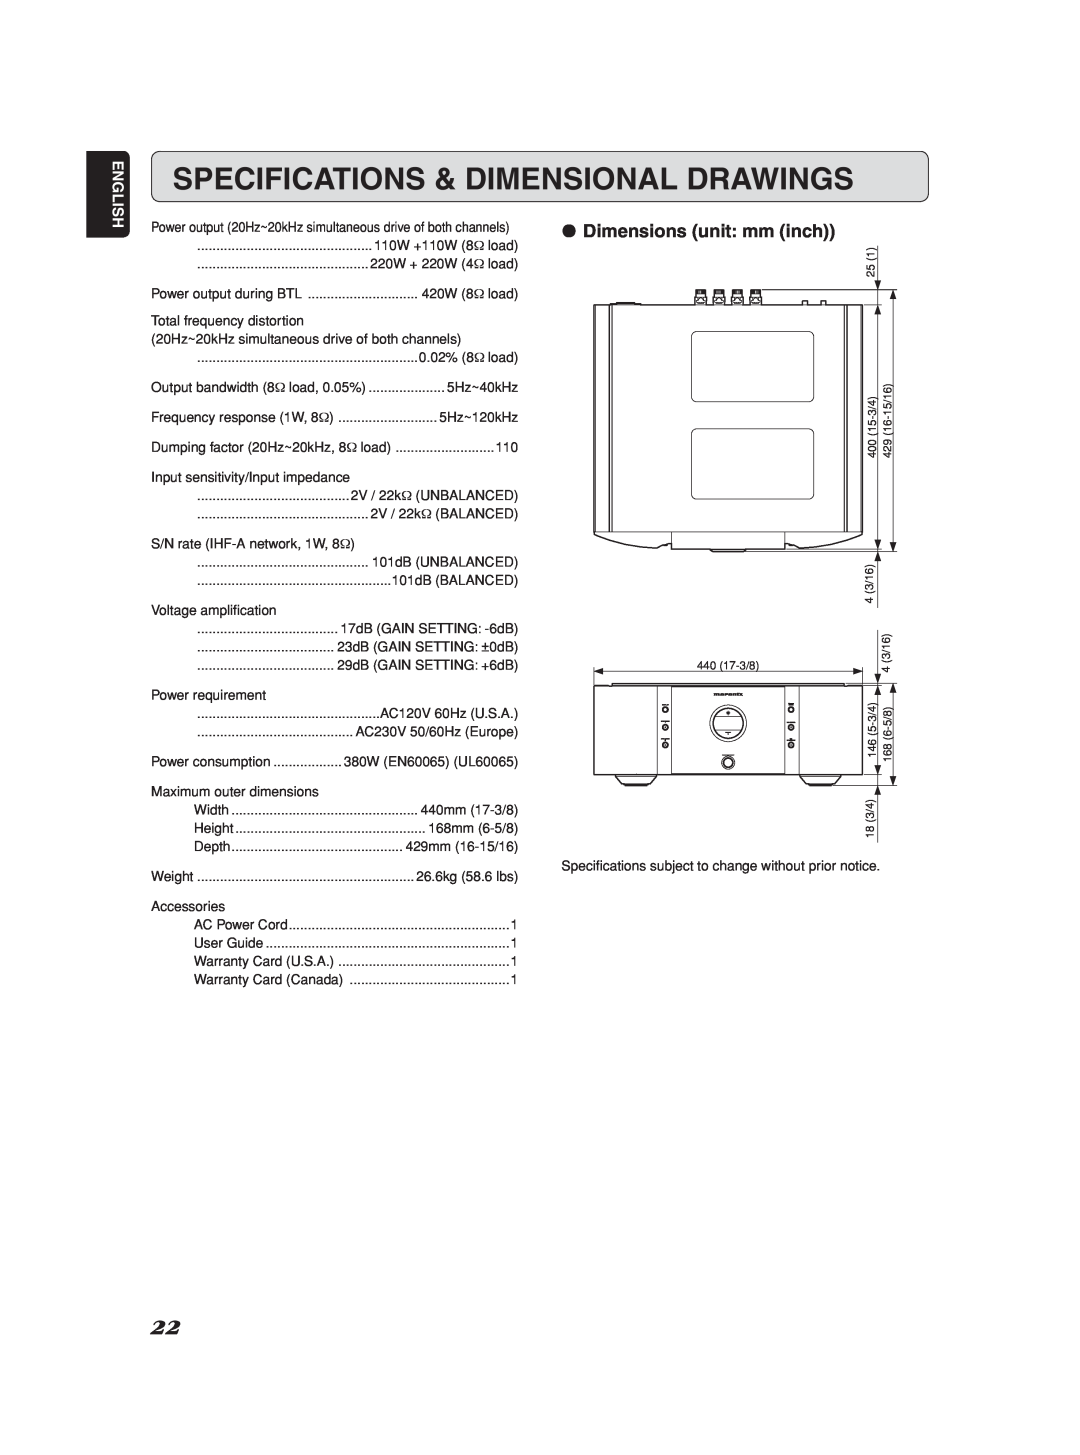 Marantz SM-1151 manual Specifications & Dimensional Drawings, ¶Dimensions unit mm inch, English 